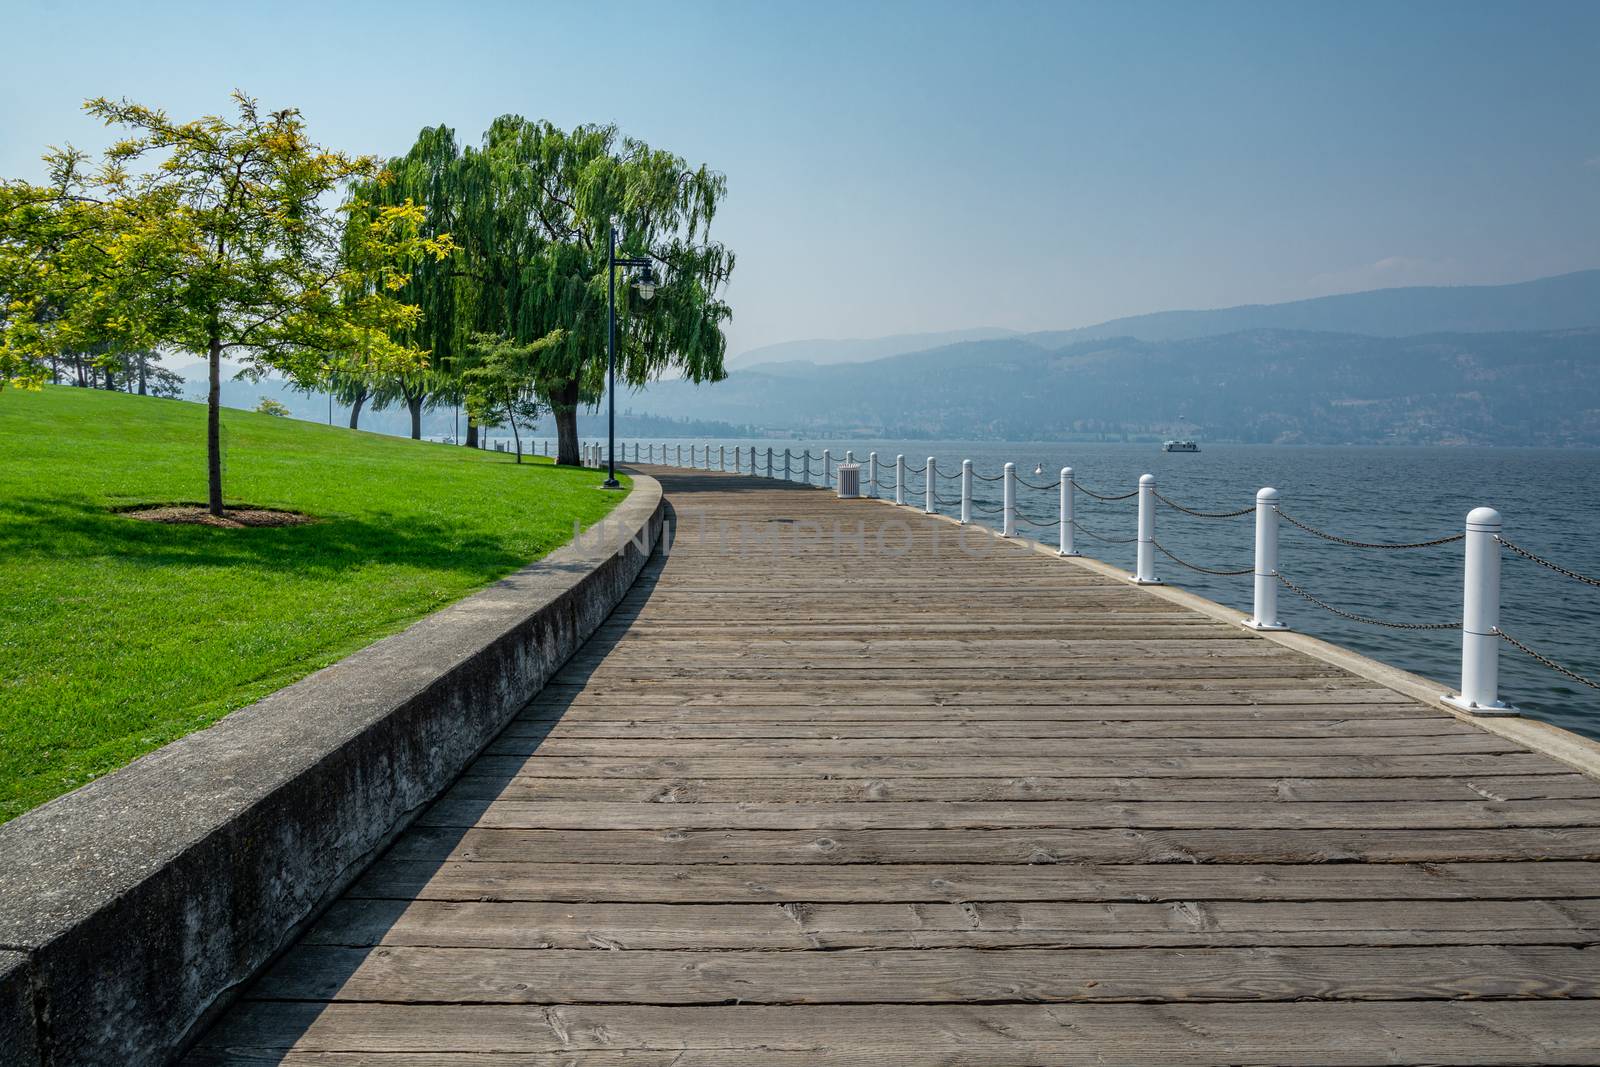 Wooden boardwalk along the waterfront on Okanagan lake in British Columbia